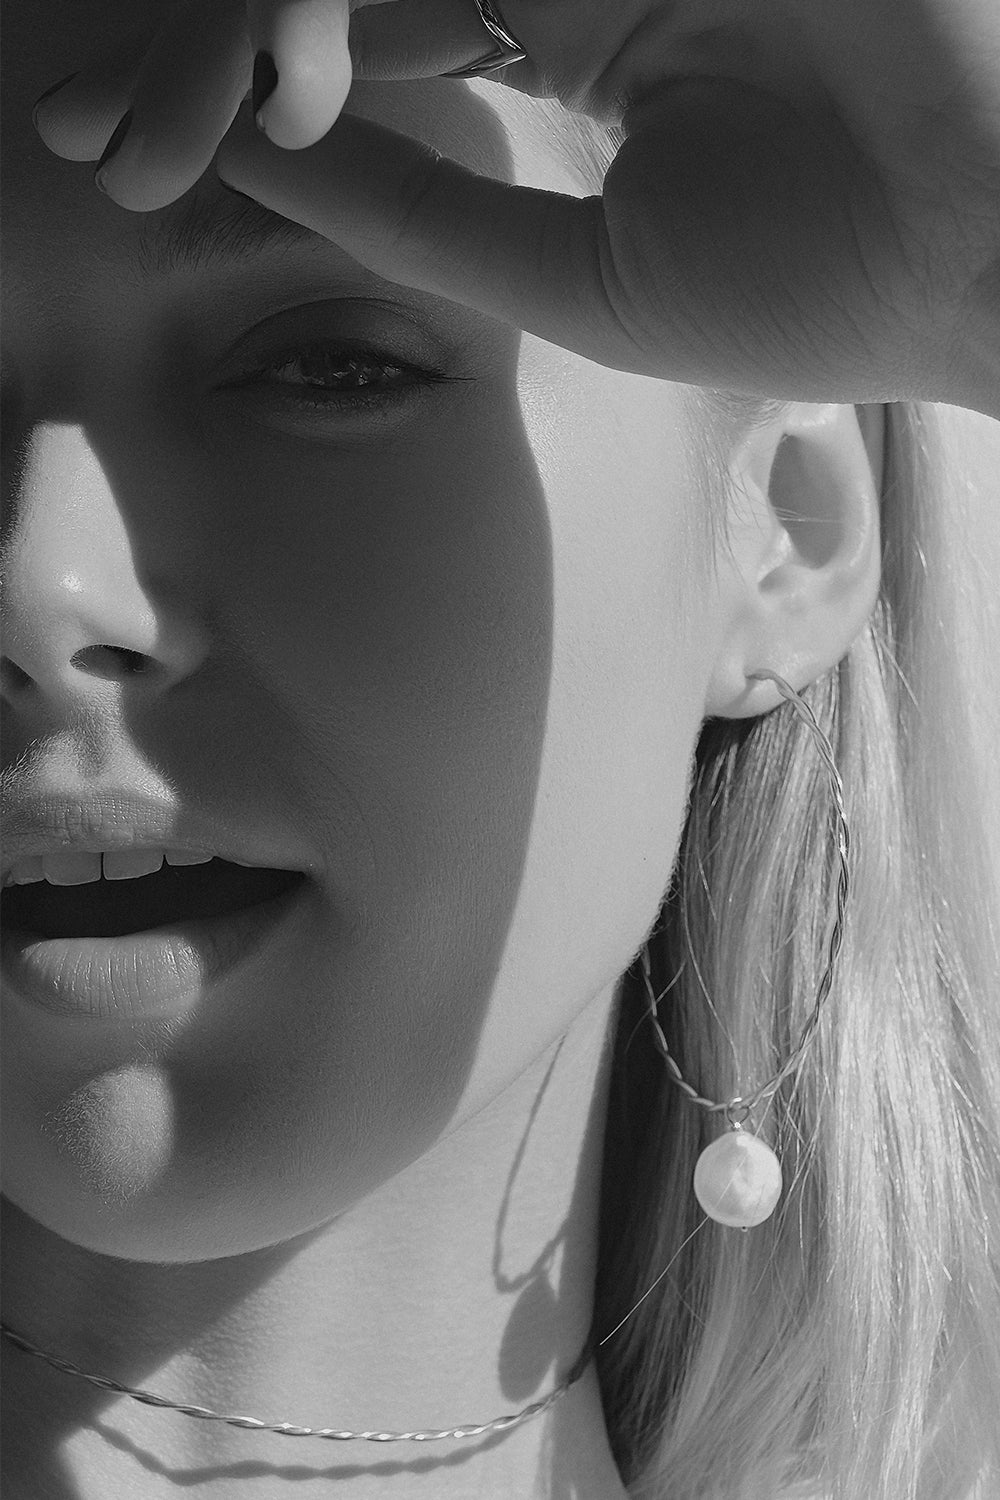 Helix Pearl Earrings Large | Silver| Natasha Schweitzer